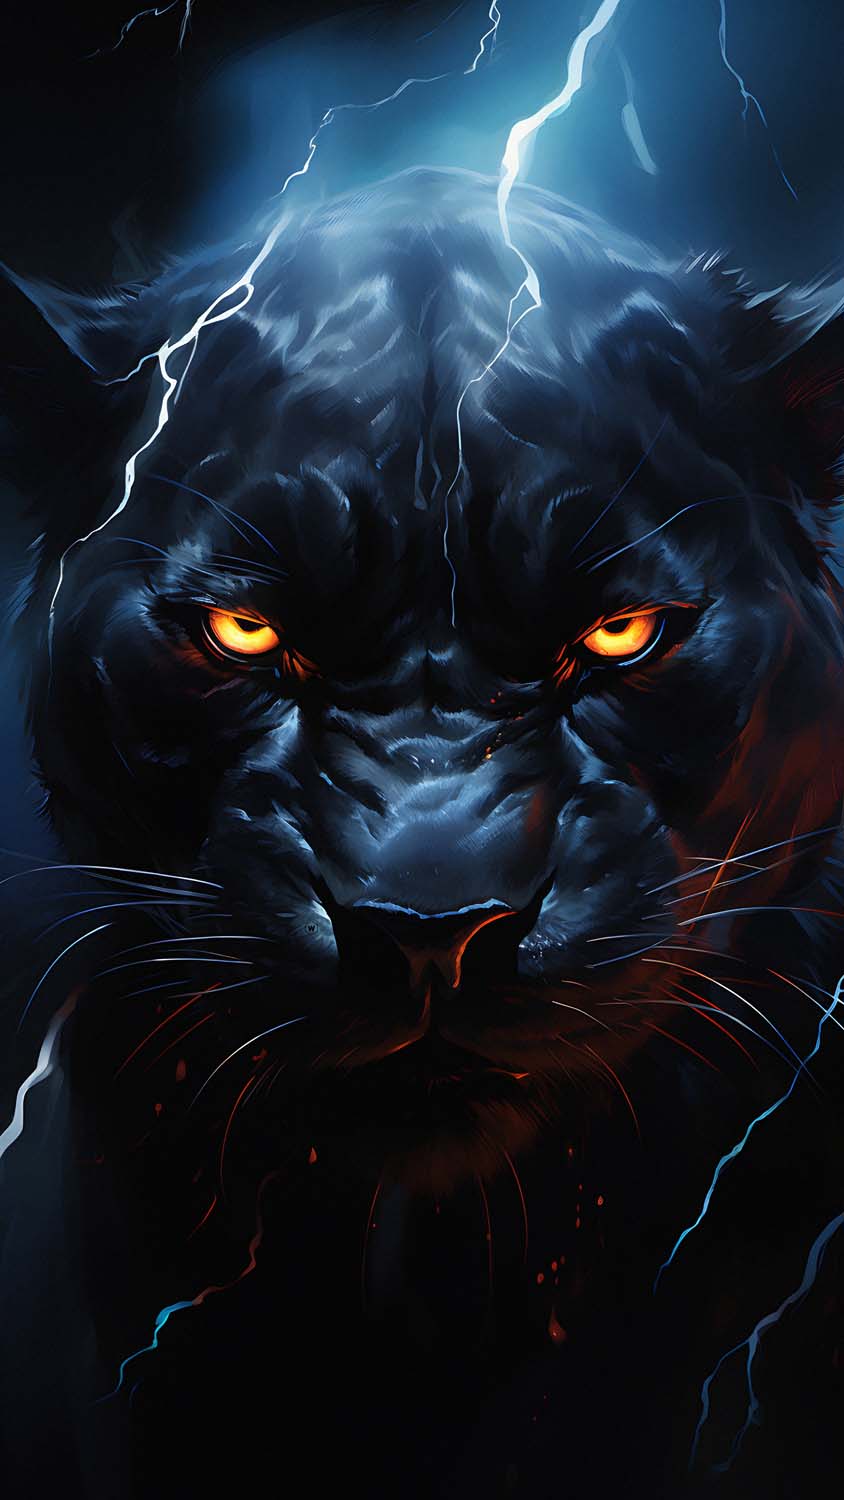 Black Panther Beast